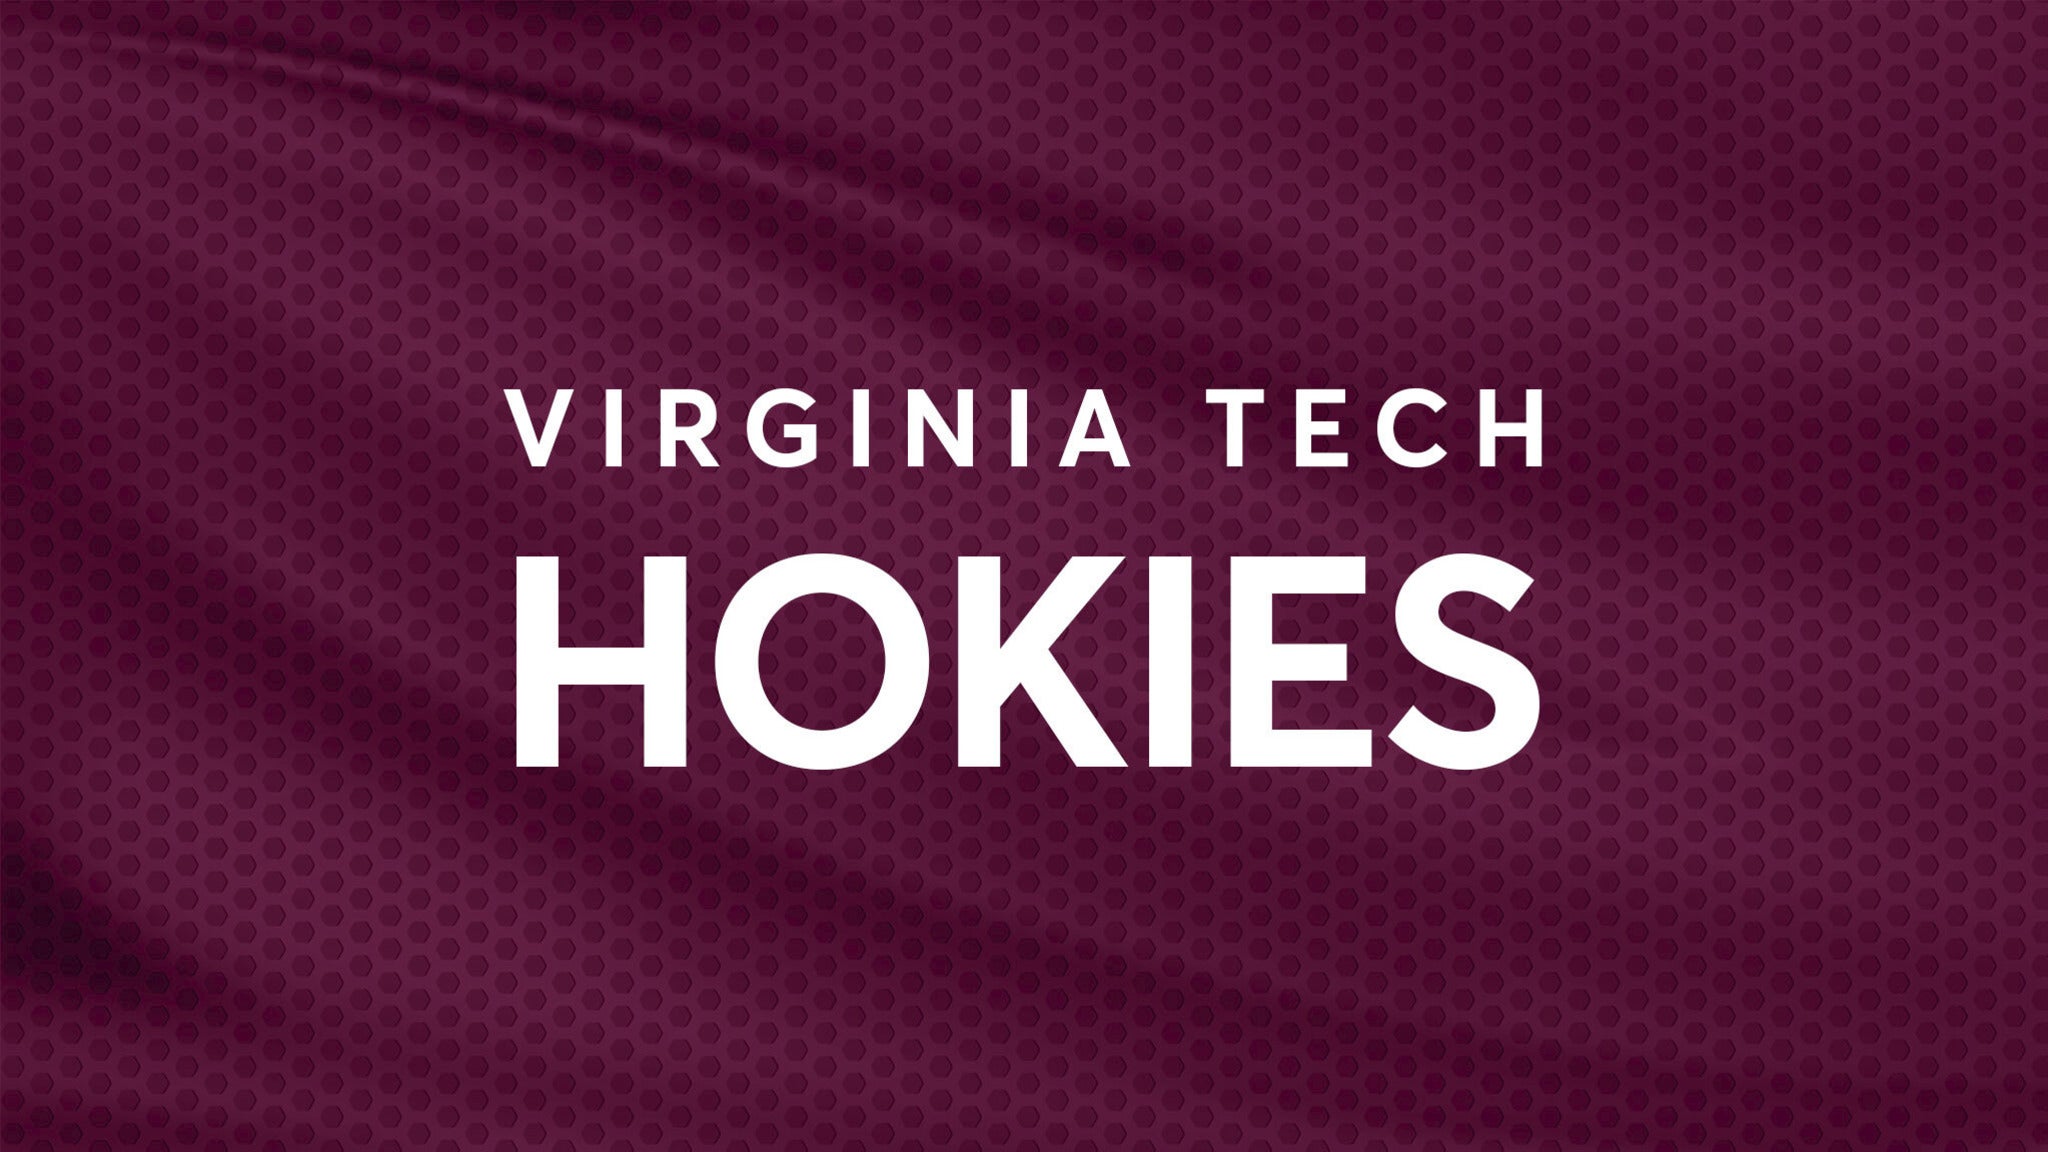 Virginia Tech Hokies College Football presale information on freepresalepasswords.com